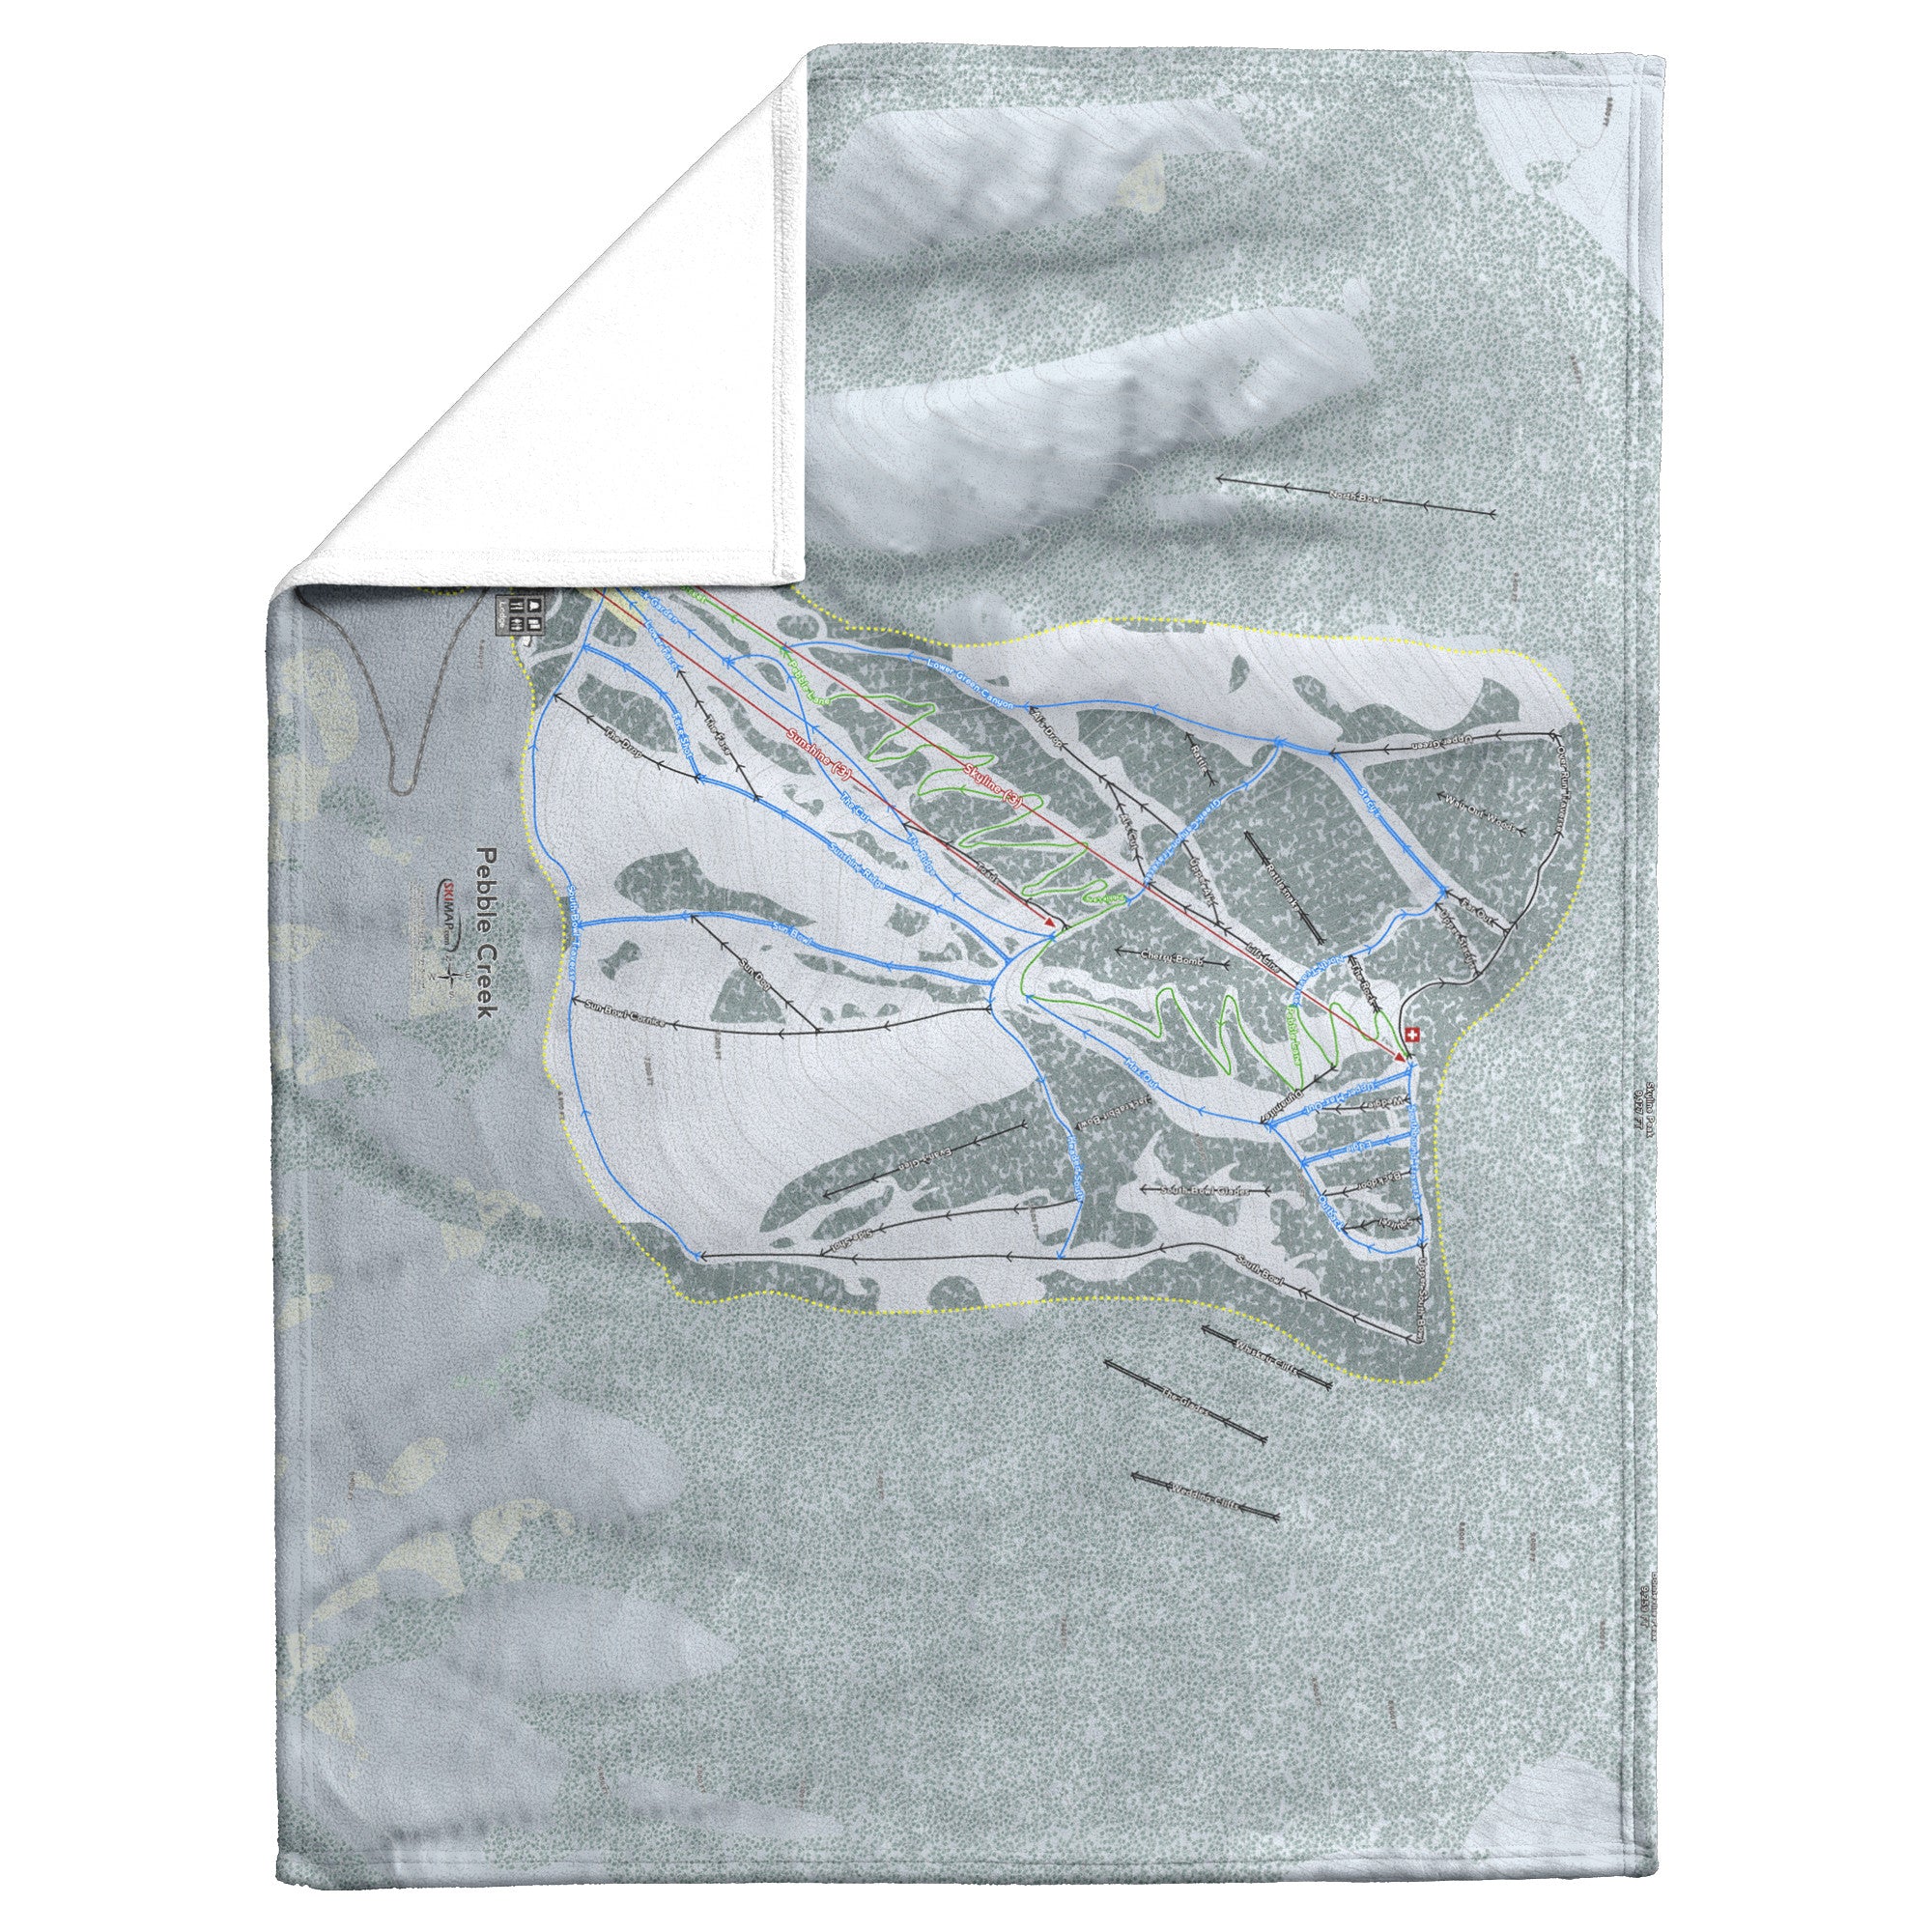 Pebble Creek, Idaho Ski Resort Map Blanket